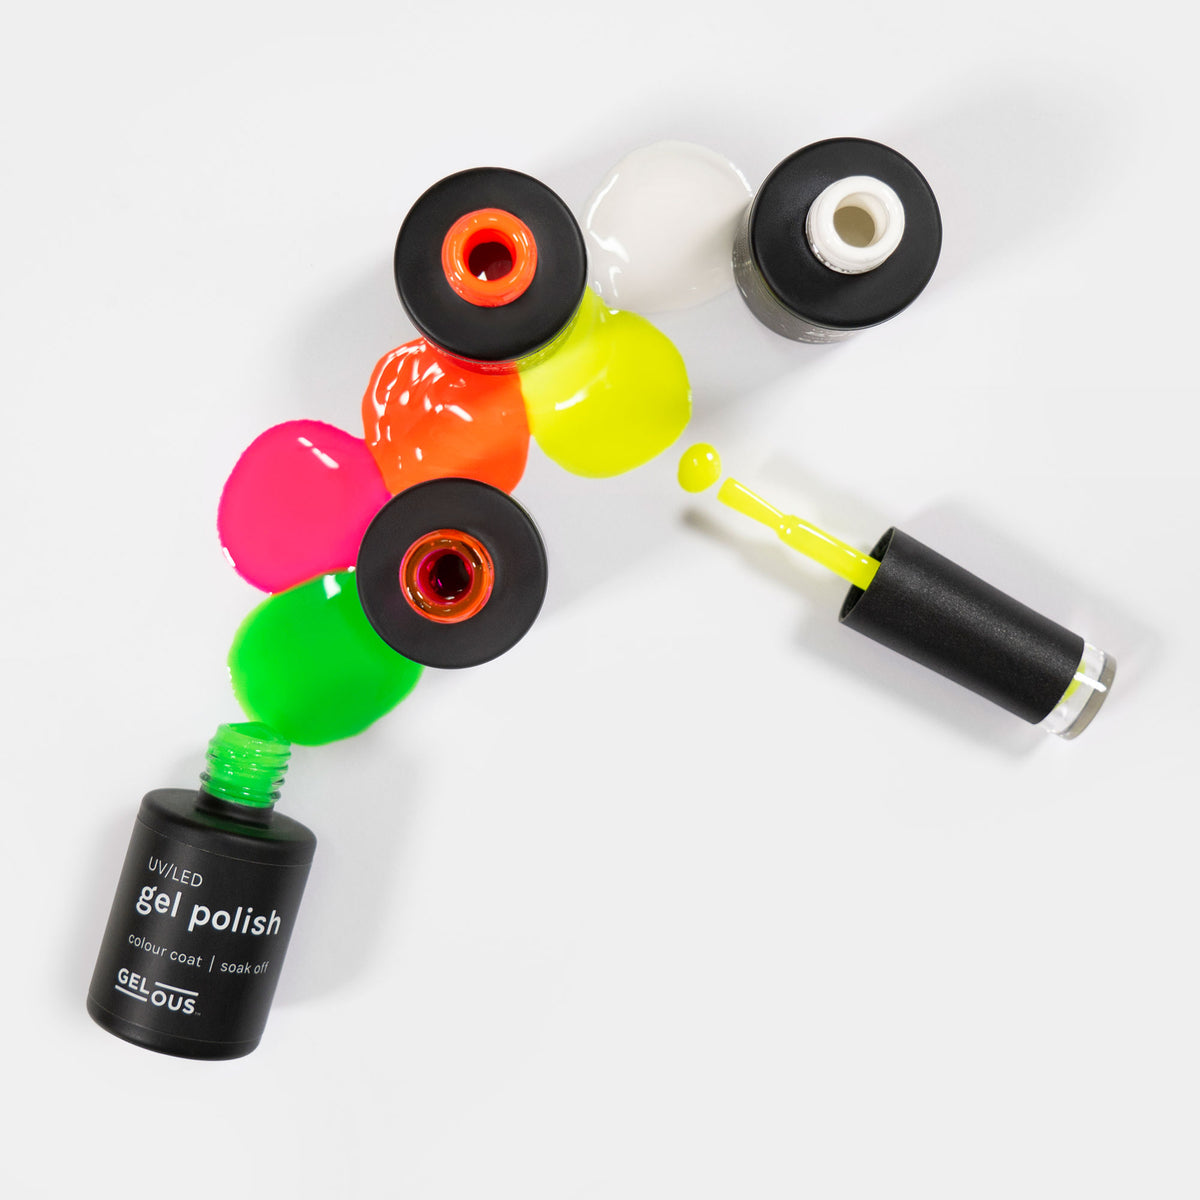 Gelous gel nail polish Neons Polish Pack - photographed in Australia